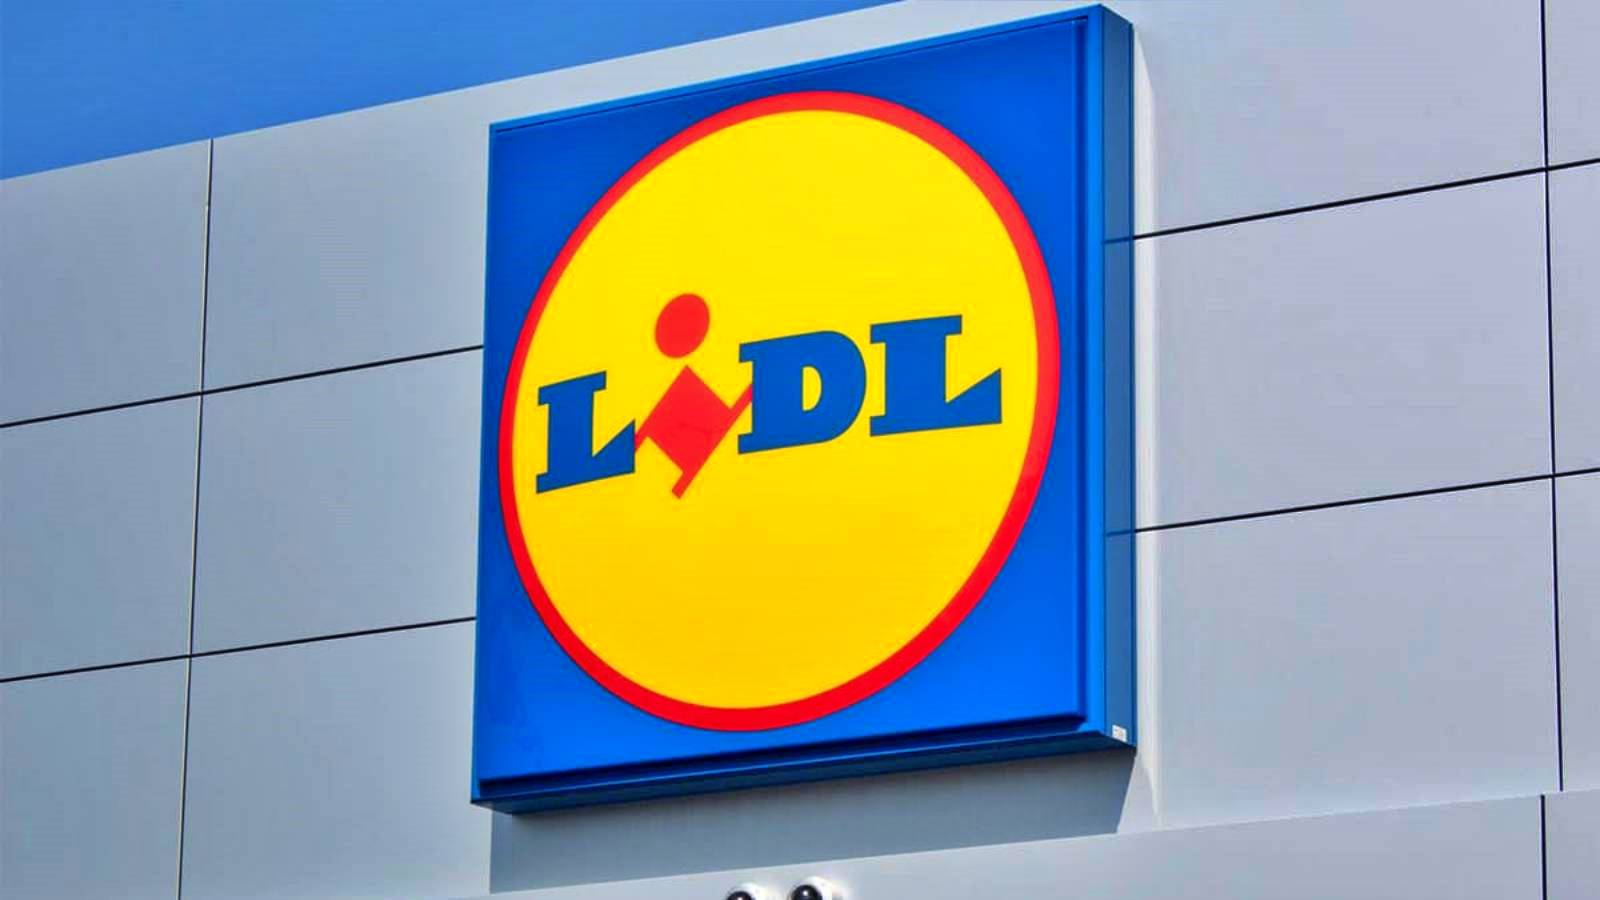 LIDL Romania vacancies